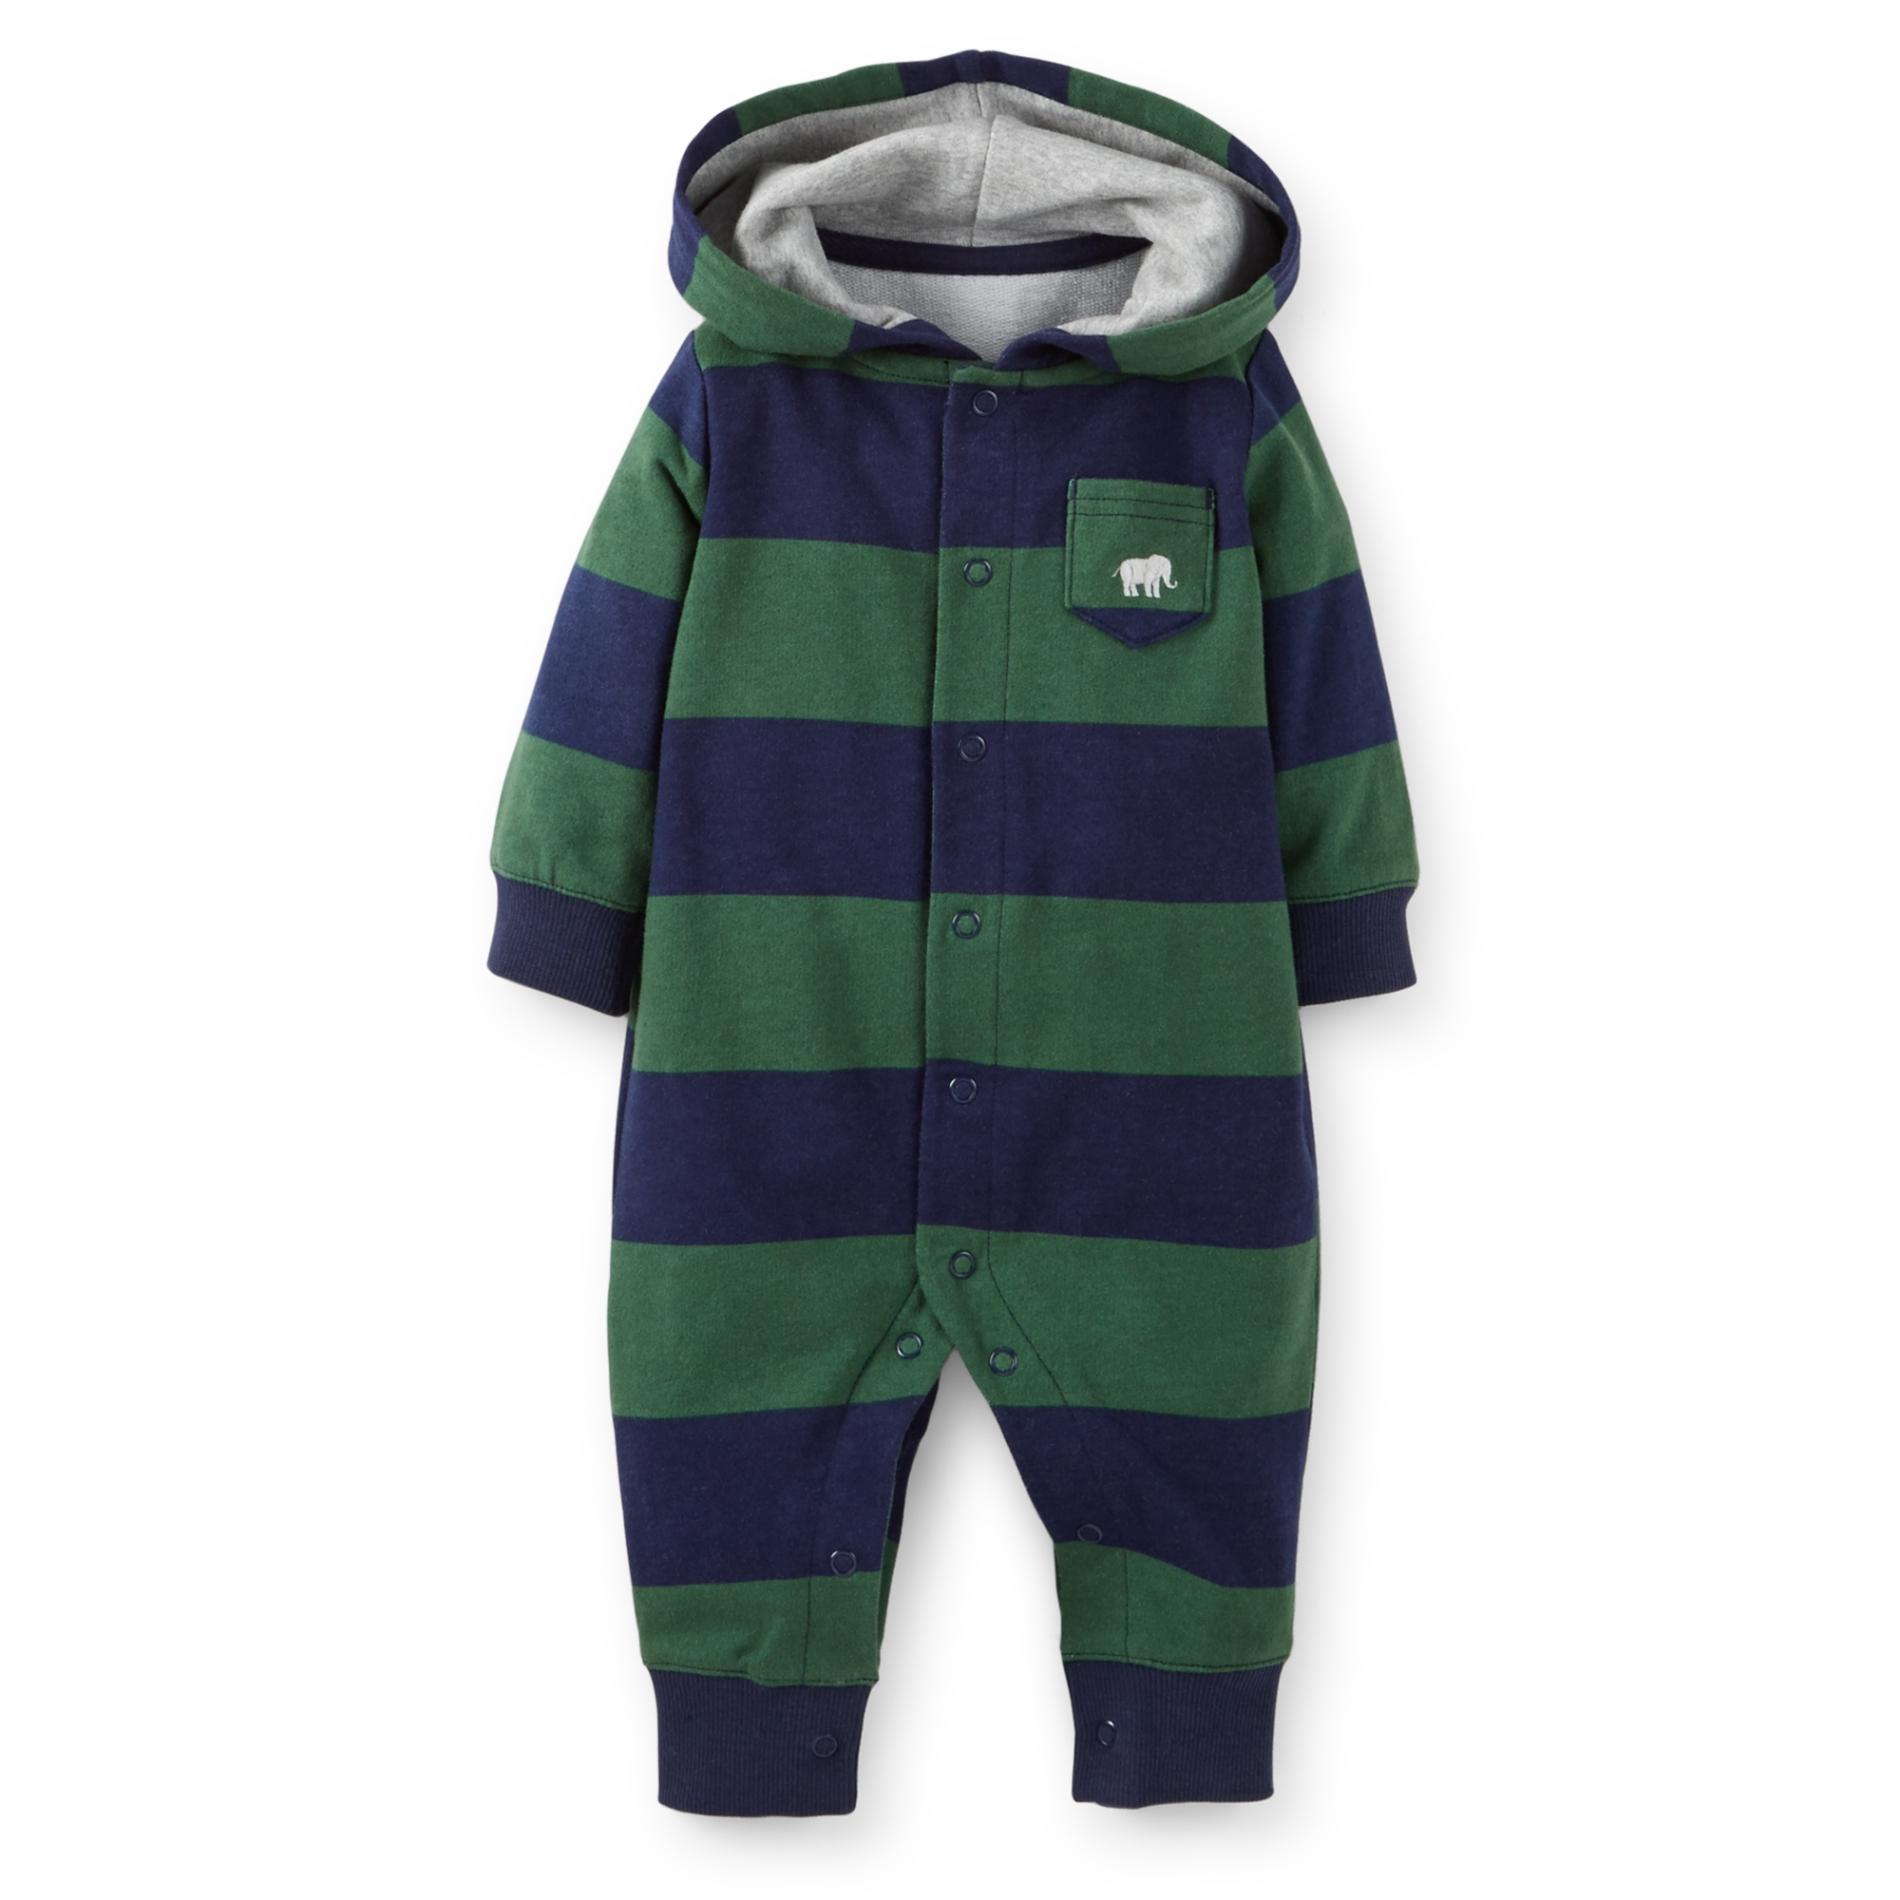 Carter's Newborn & Infant Boy's Hooded Fleece Bodysuit - Elephant & Striped